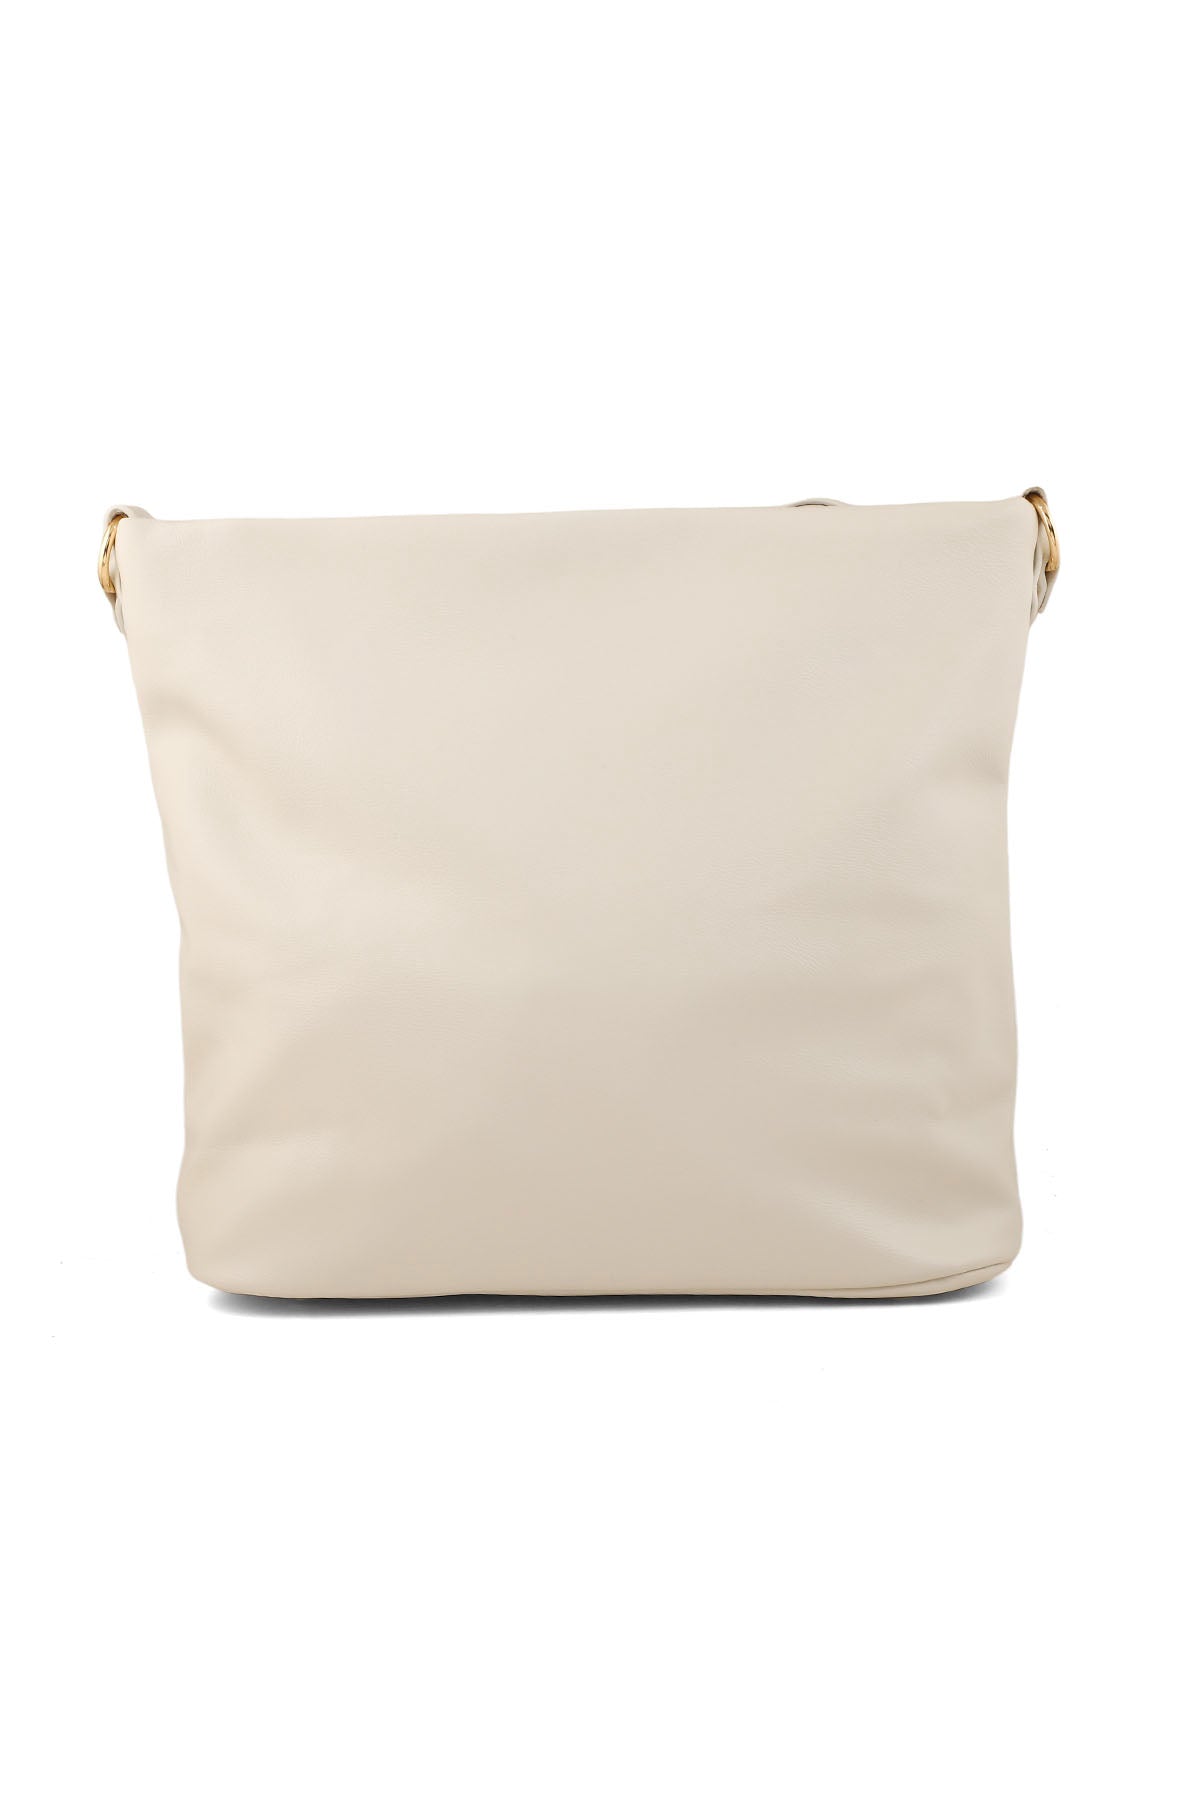 Hobo Hand Bags B15135-Cream